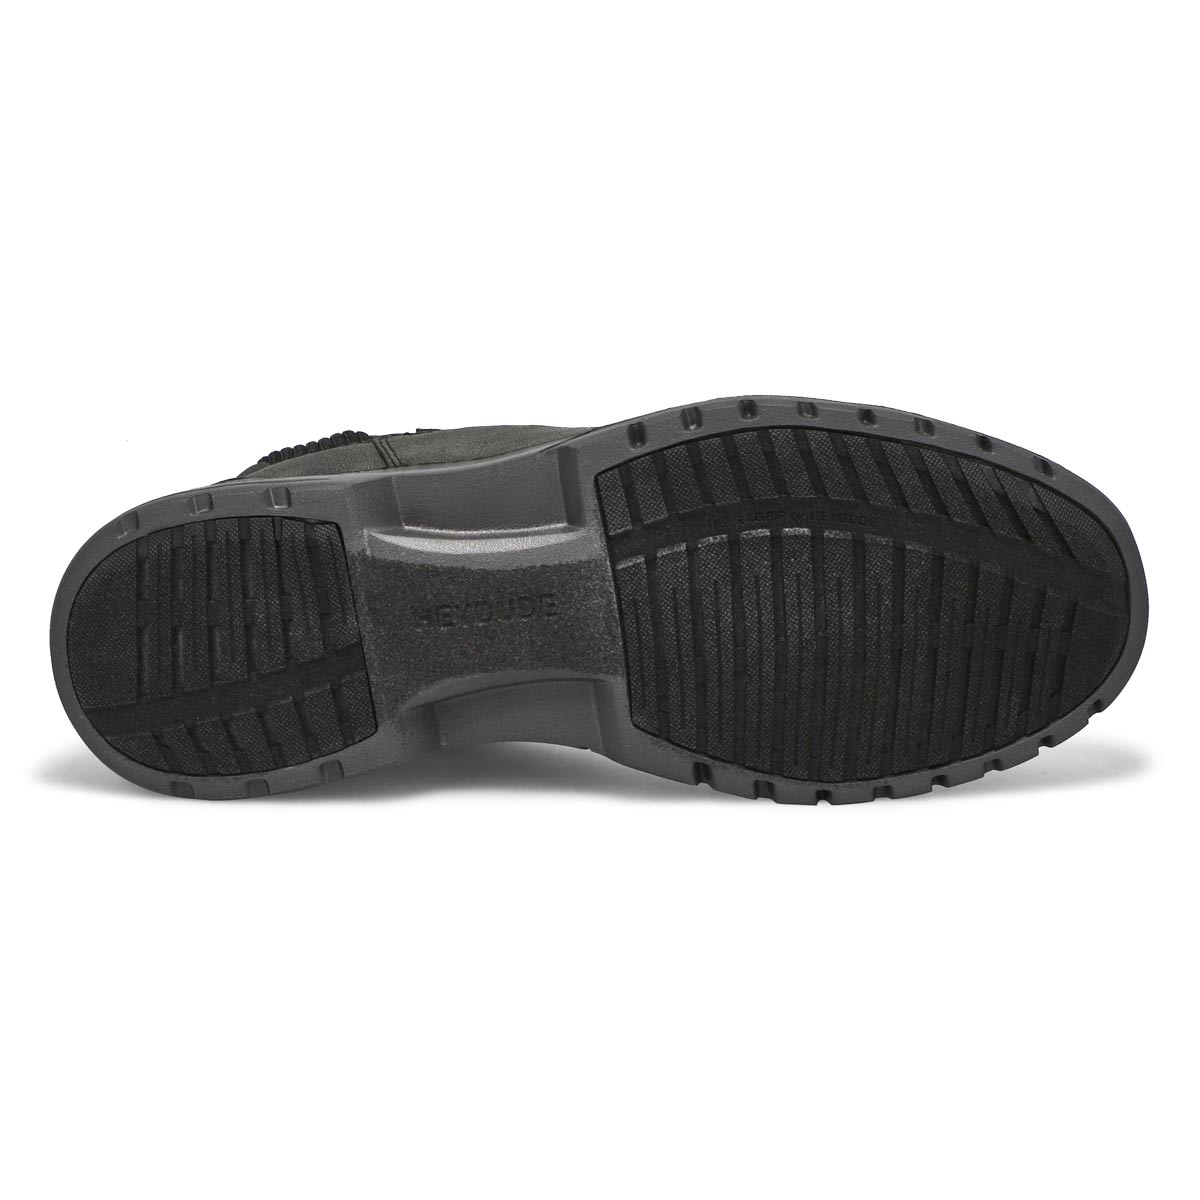 Men's Scott Grip Chelsea Boot - Total Black